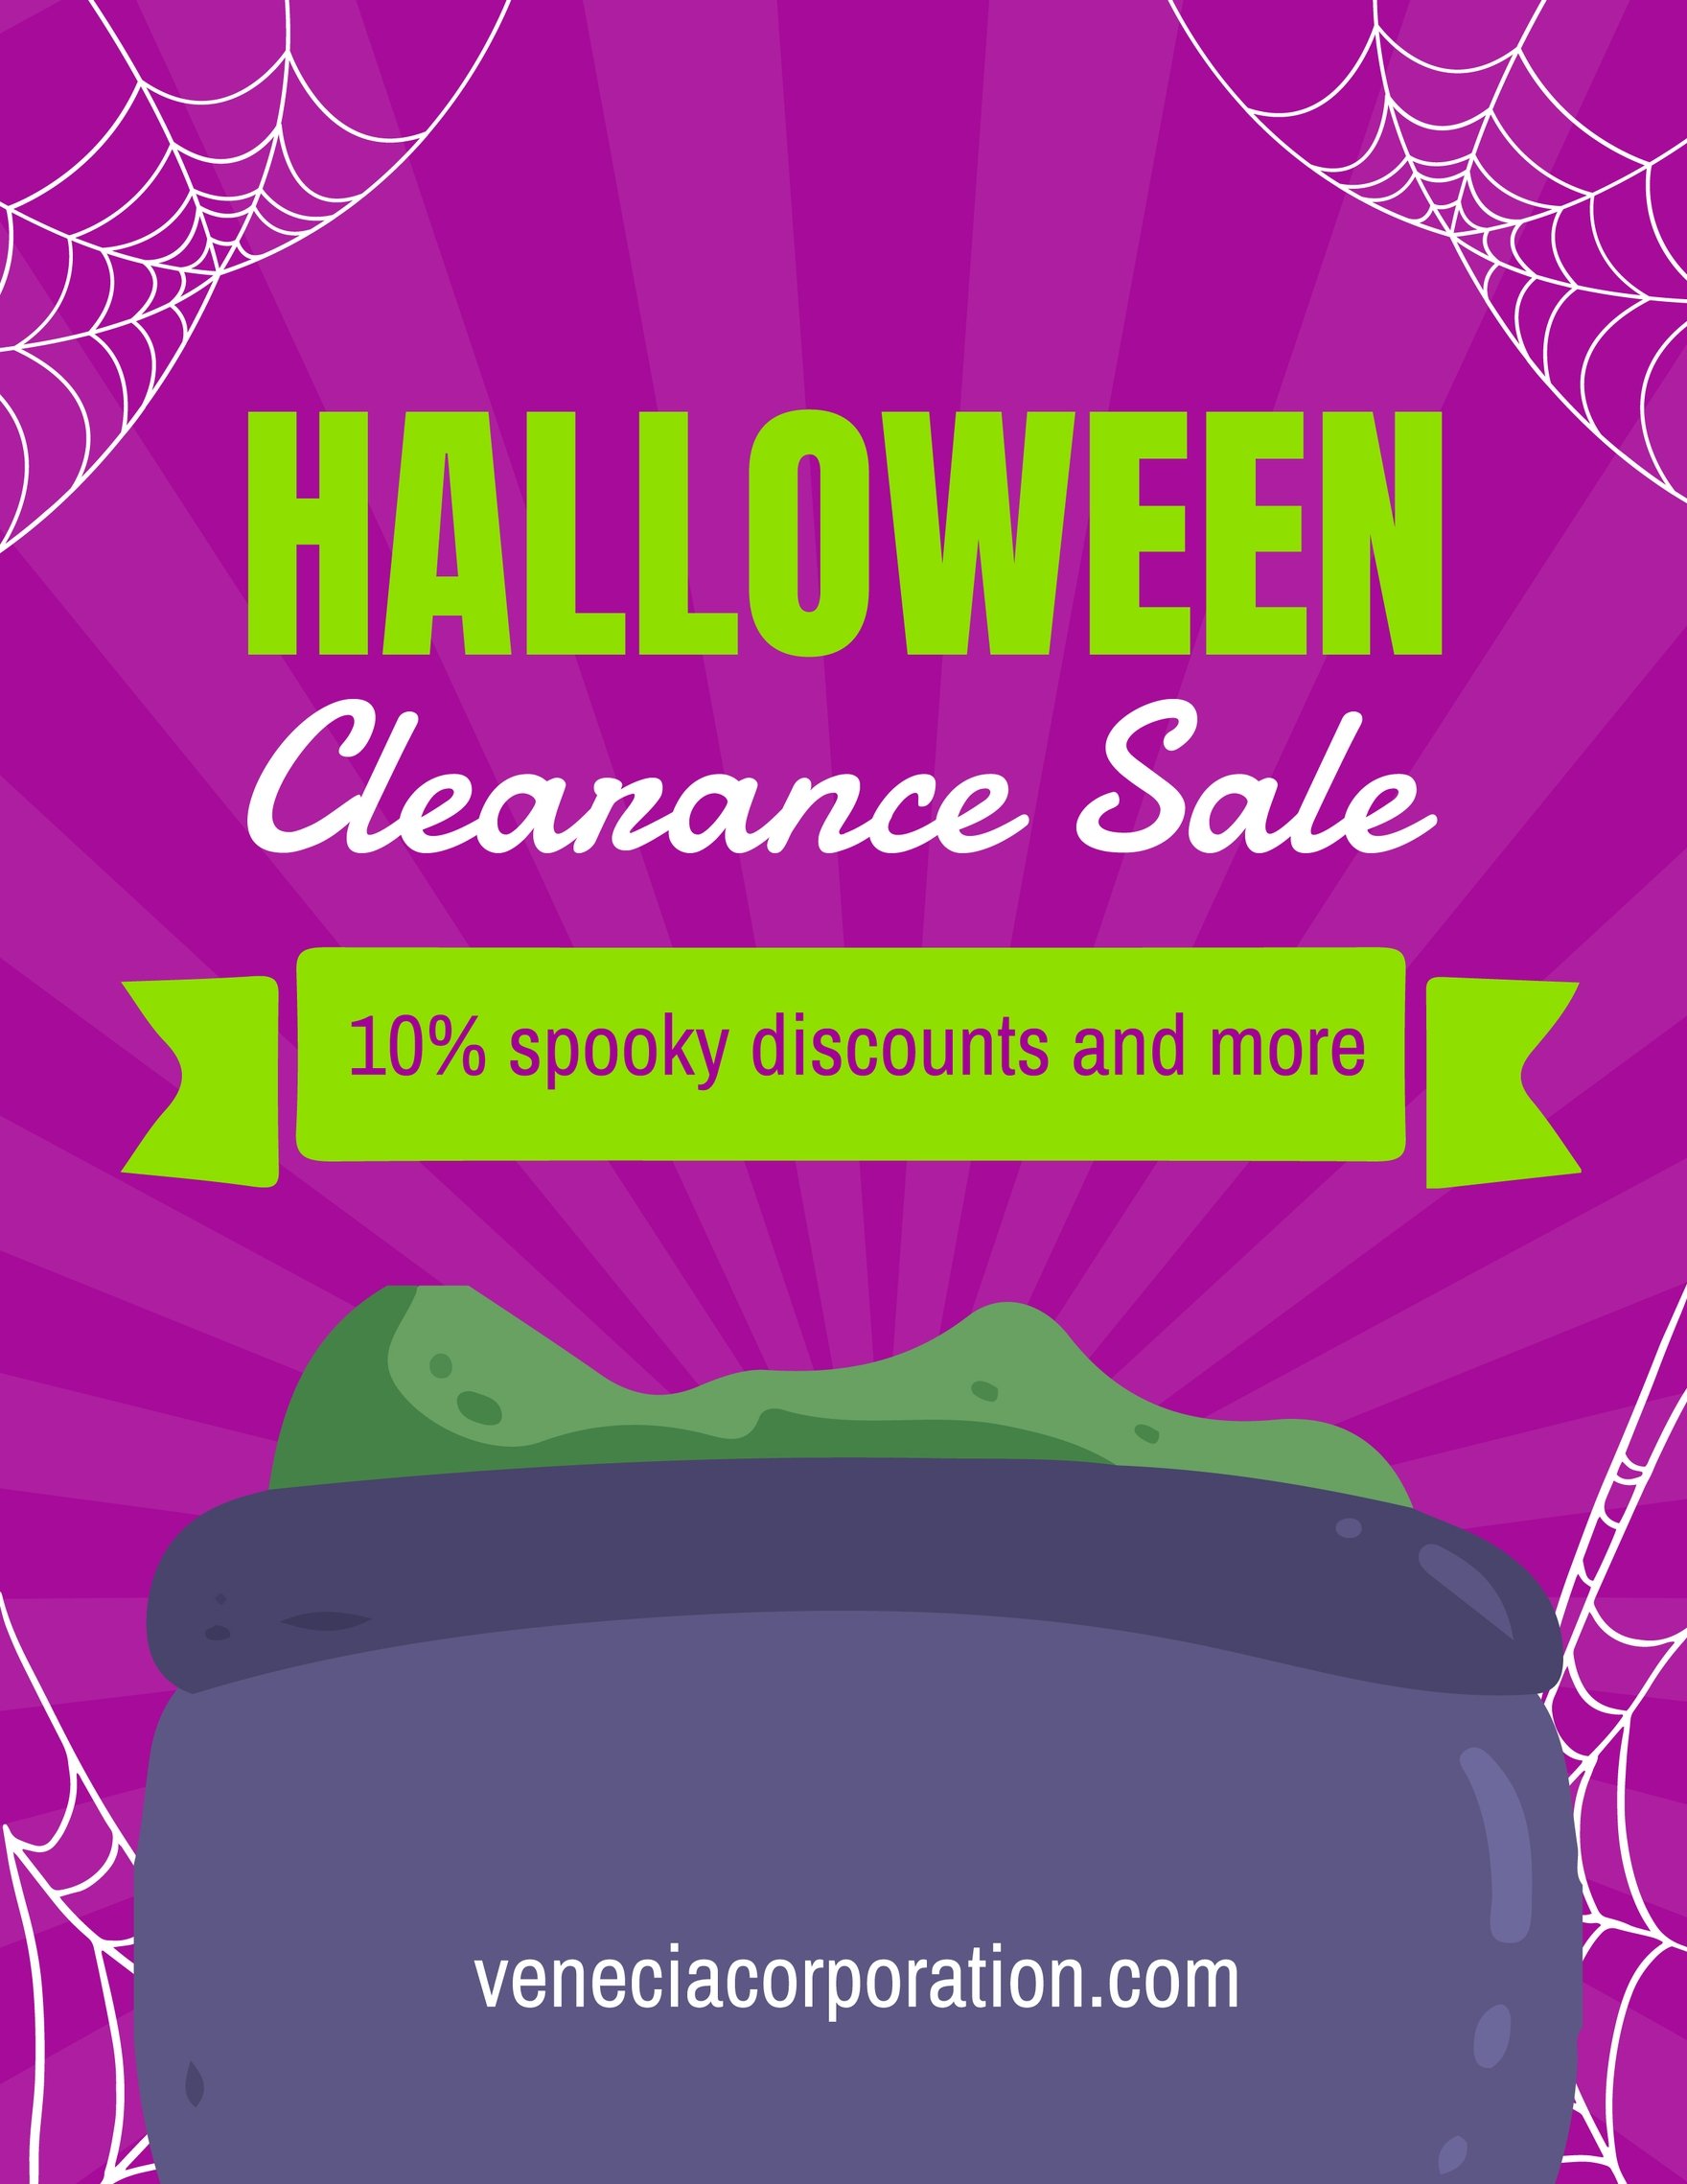 Free Sale Halloween Flyer in Word, Google Docs, Illustrator, PSD, Apple Pages, Publisher, EPS, SVG, JPG, PNG